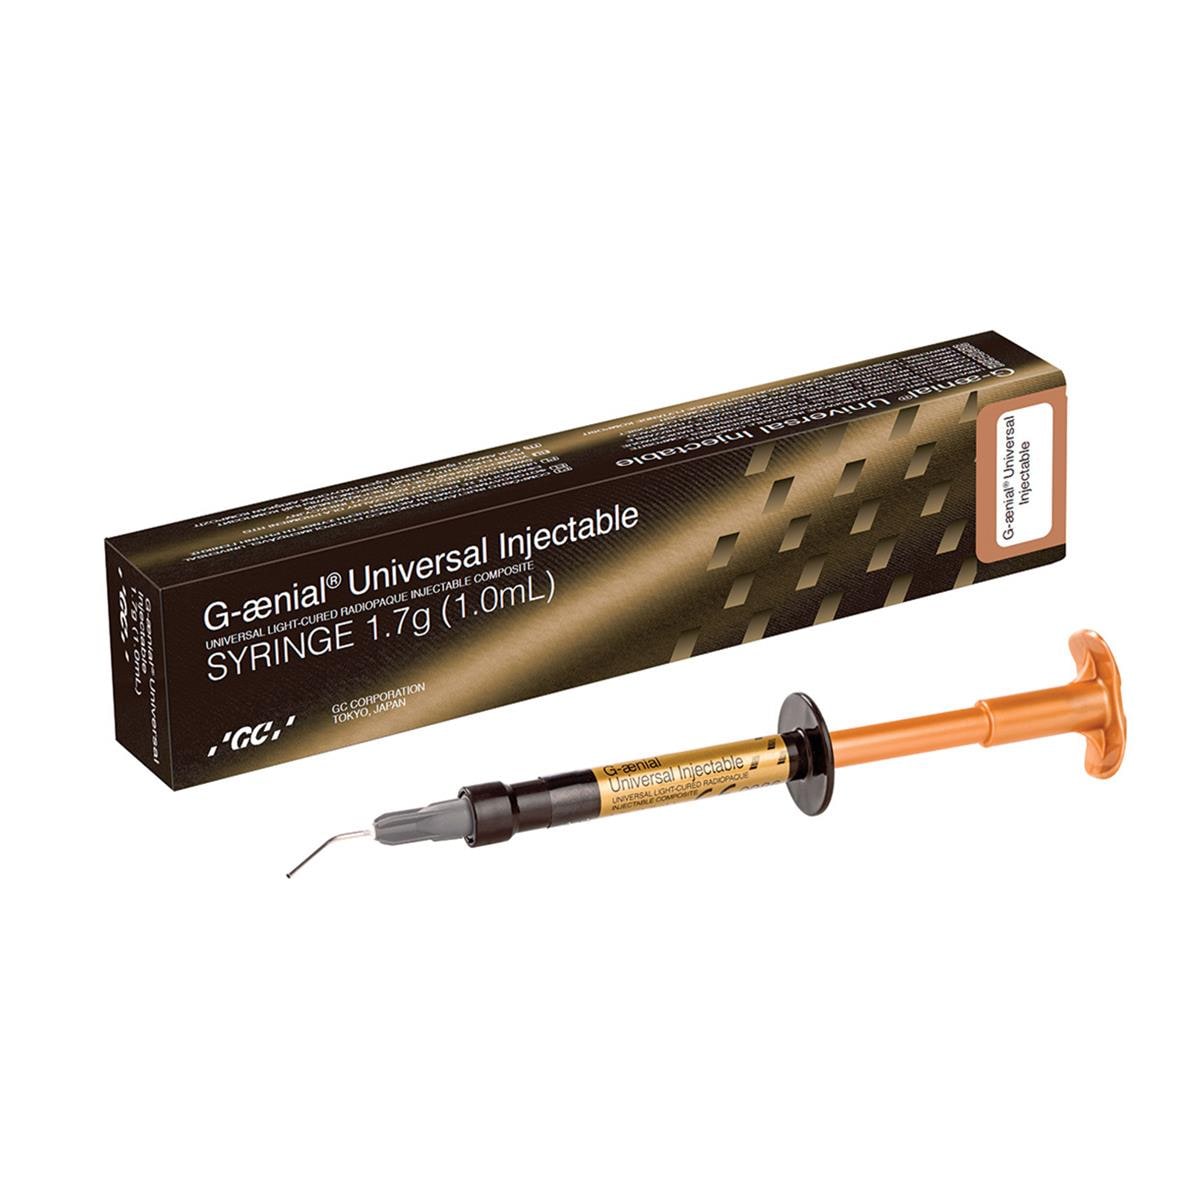 GC G-aenial Universal Injectable Syringe 1ml XBW